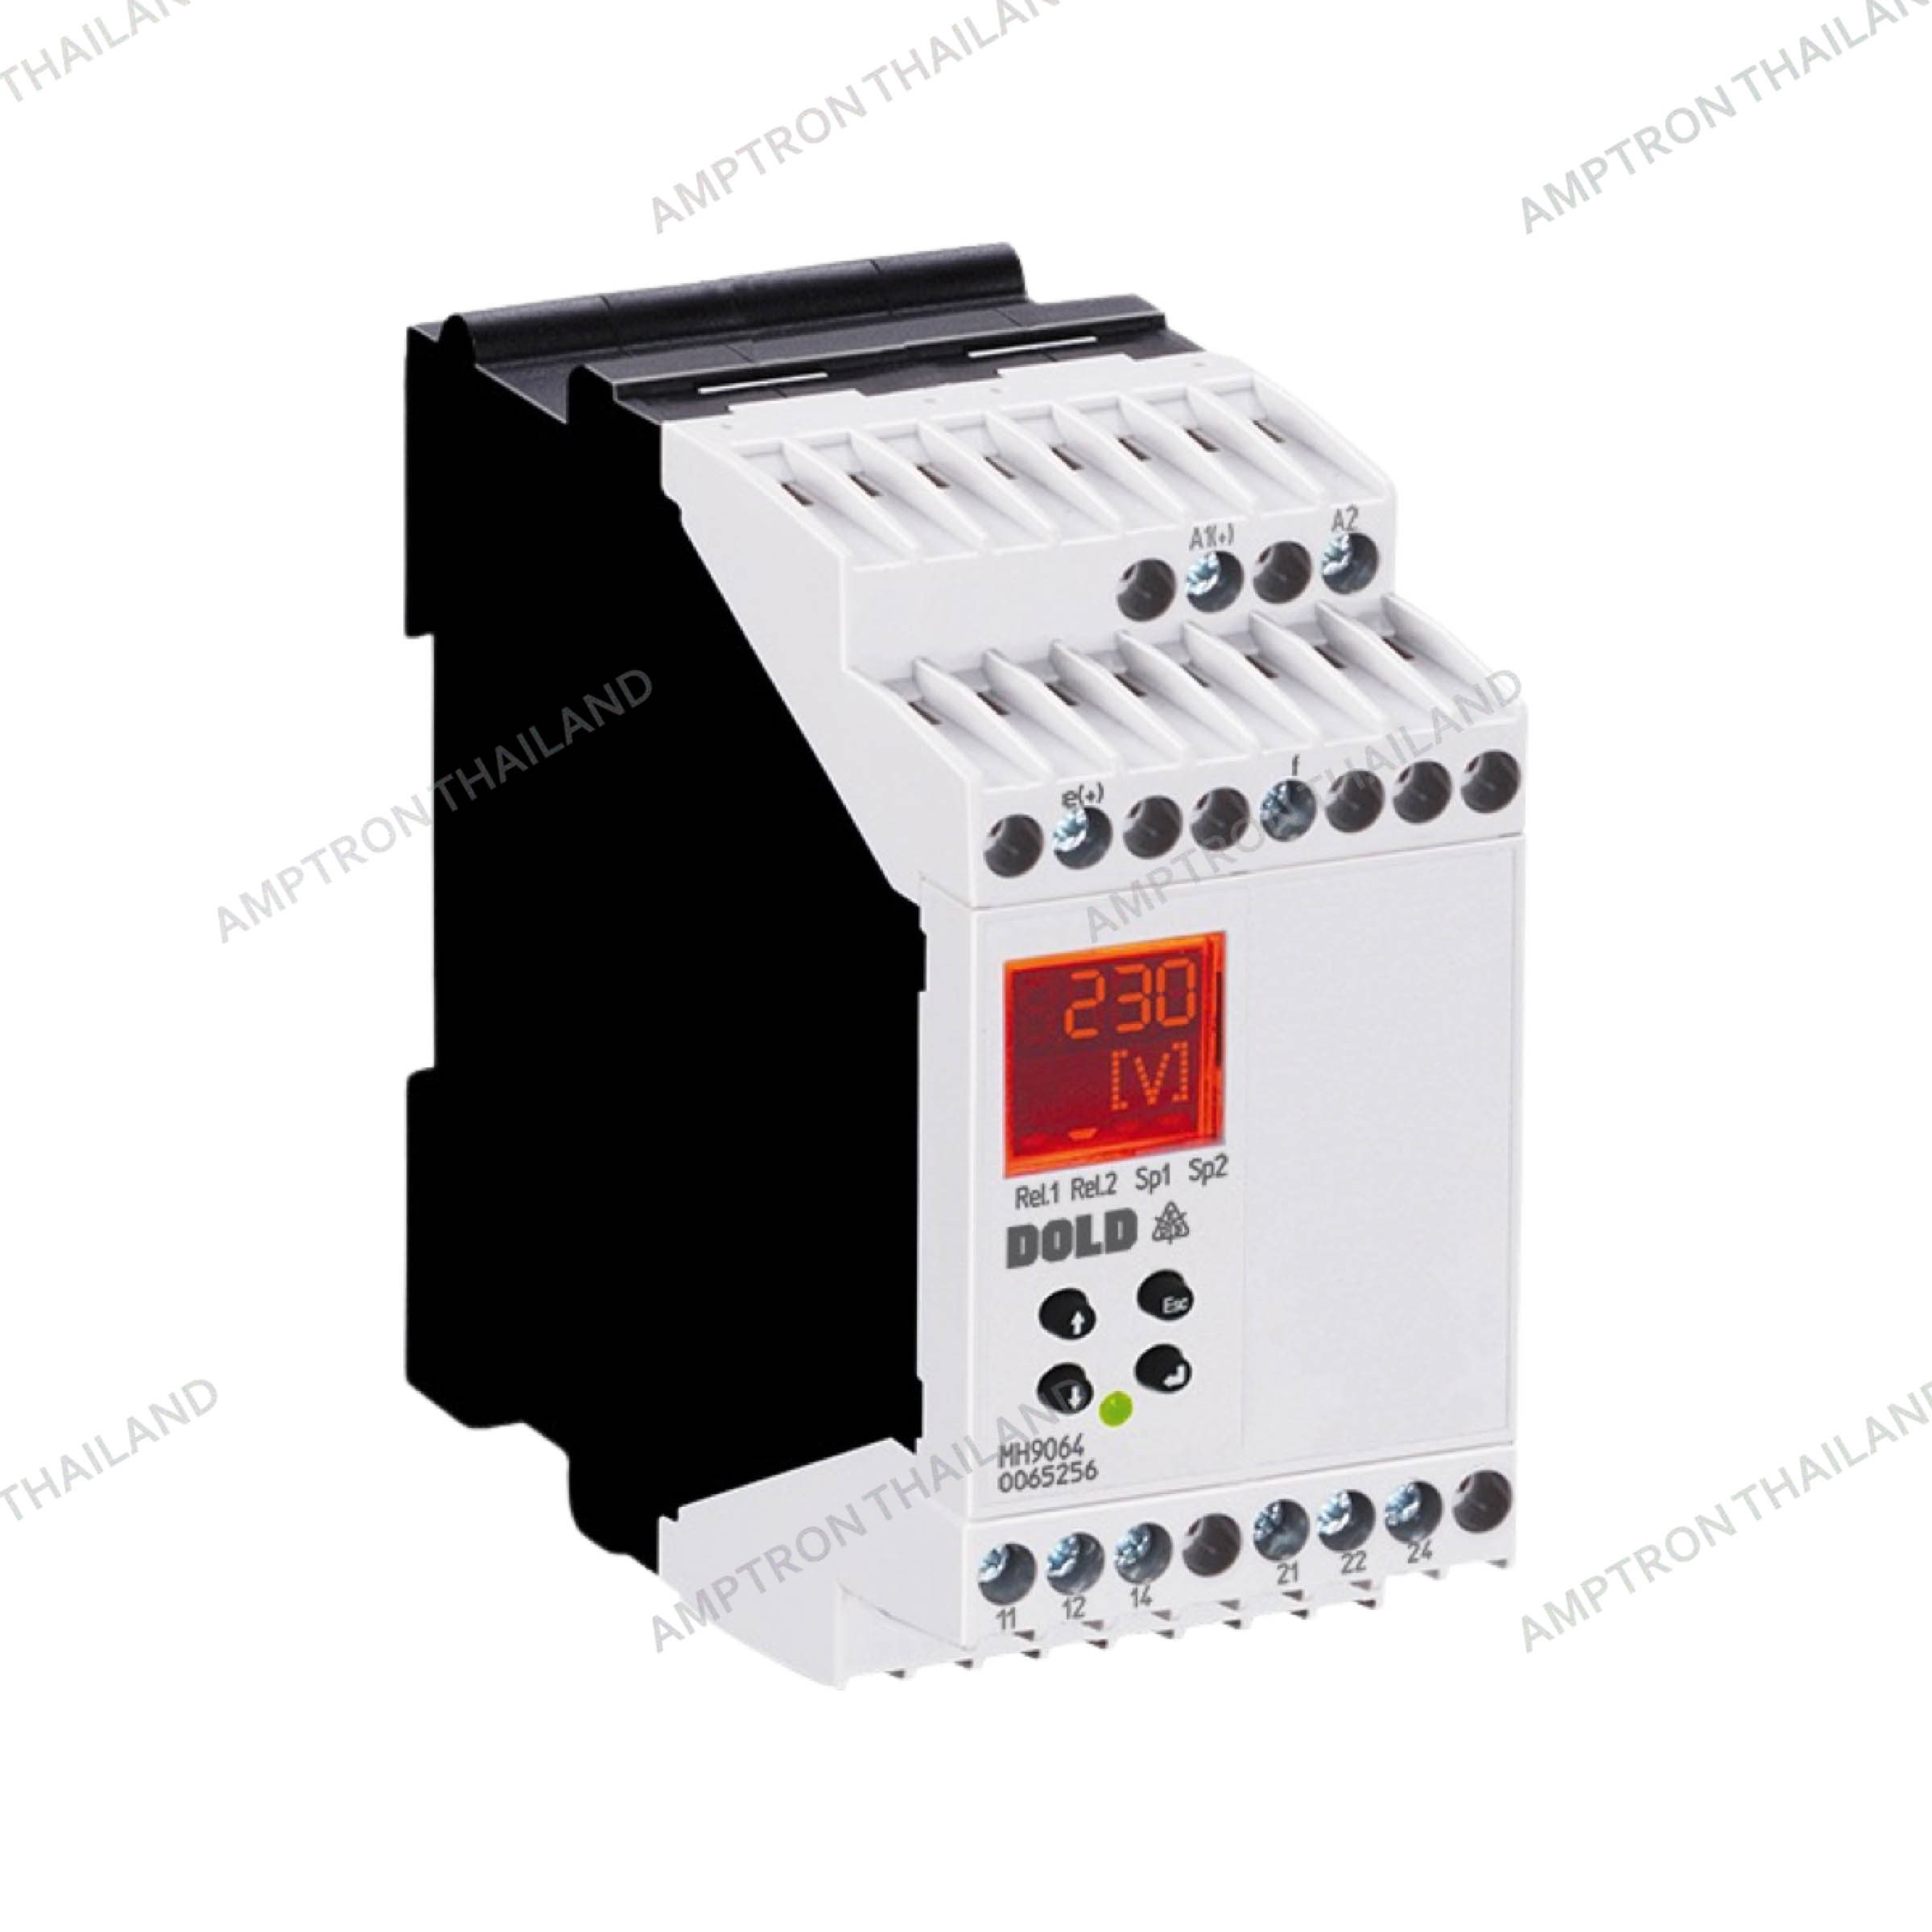 MH 9064/ MK 9064N VARIMETER Voltage relay